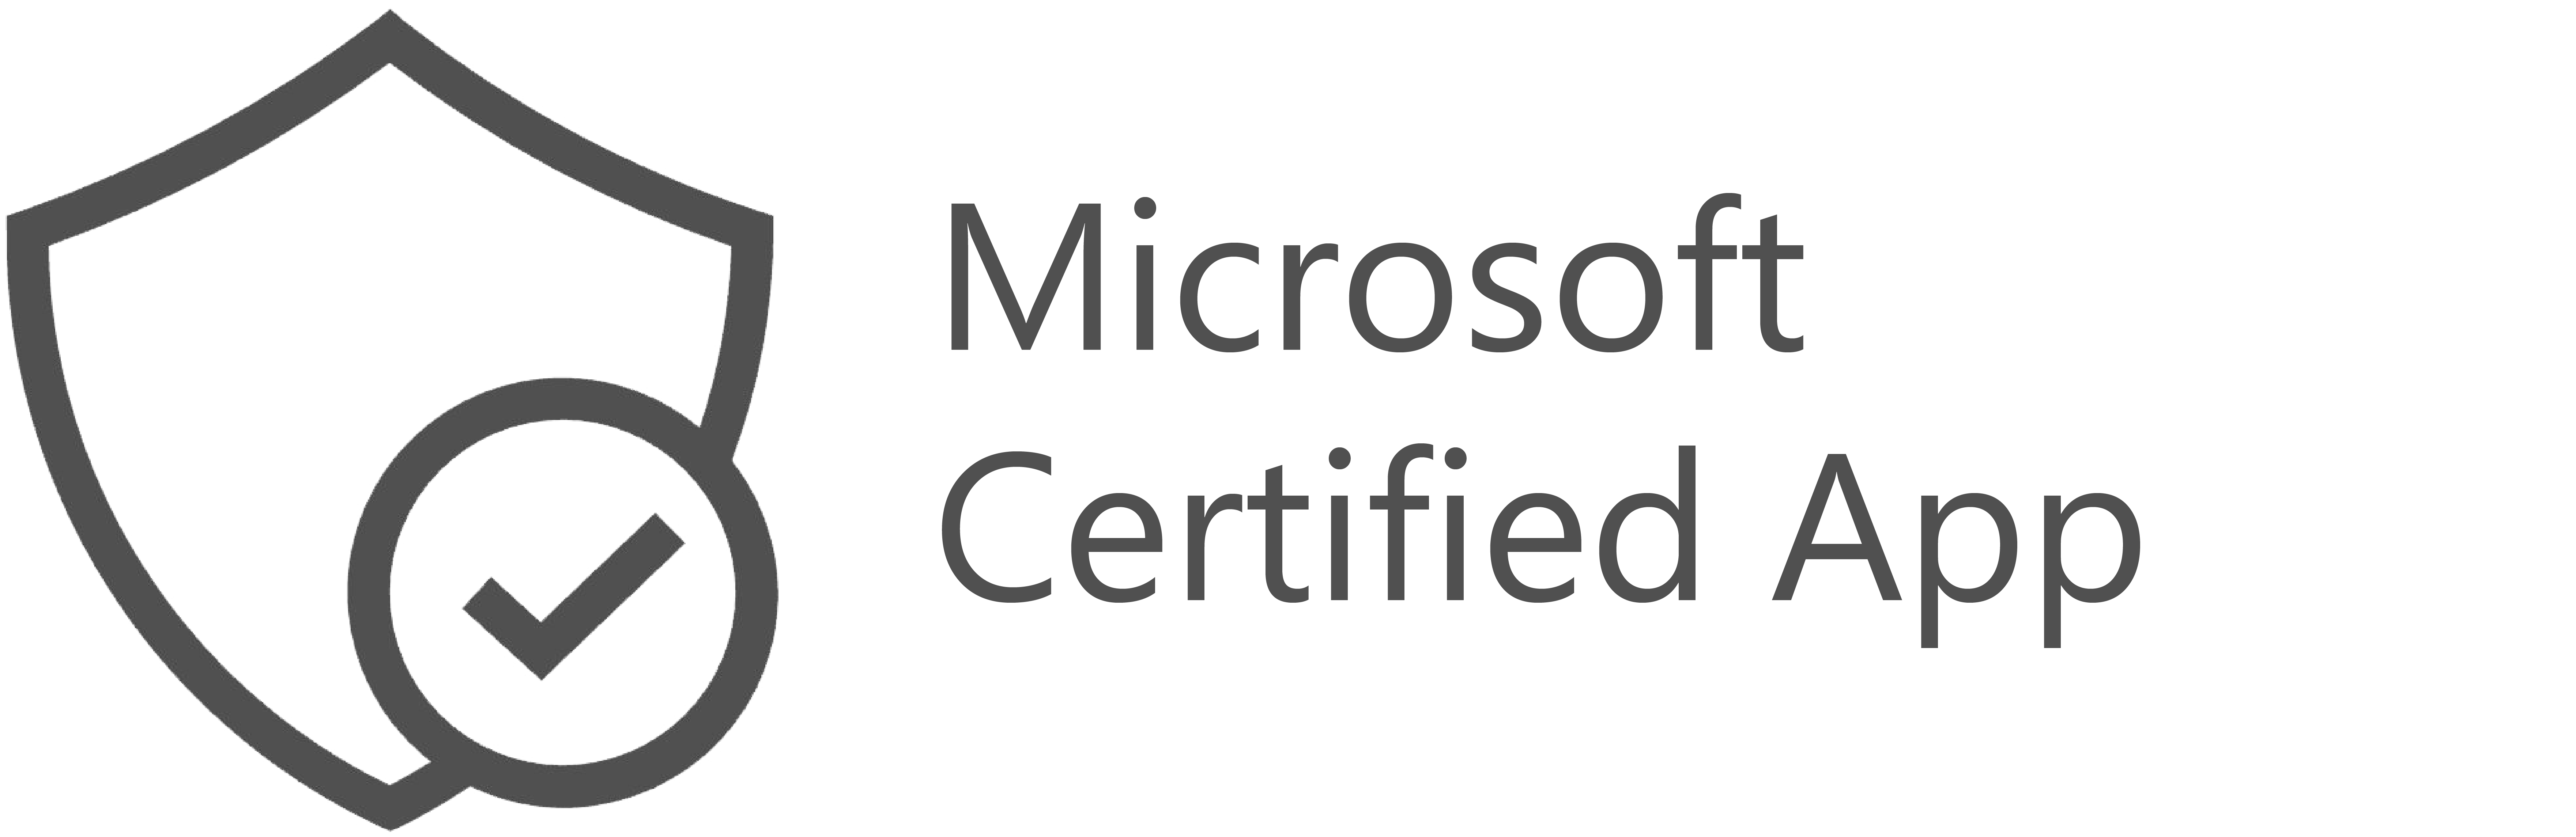 Microsoft_Certified_App_PNG.png